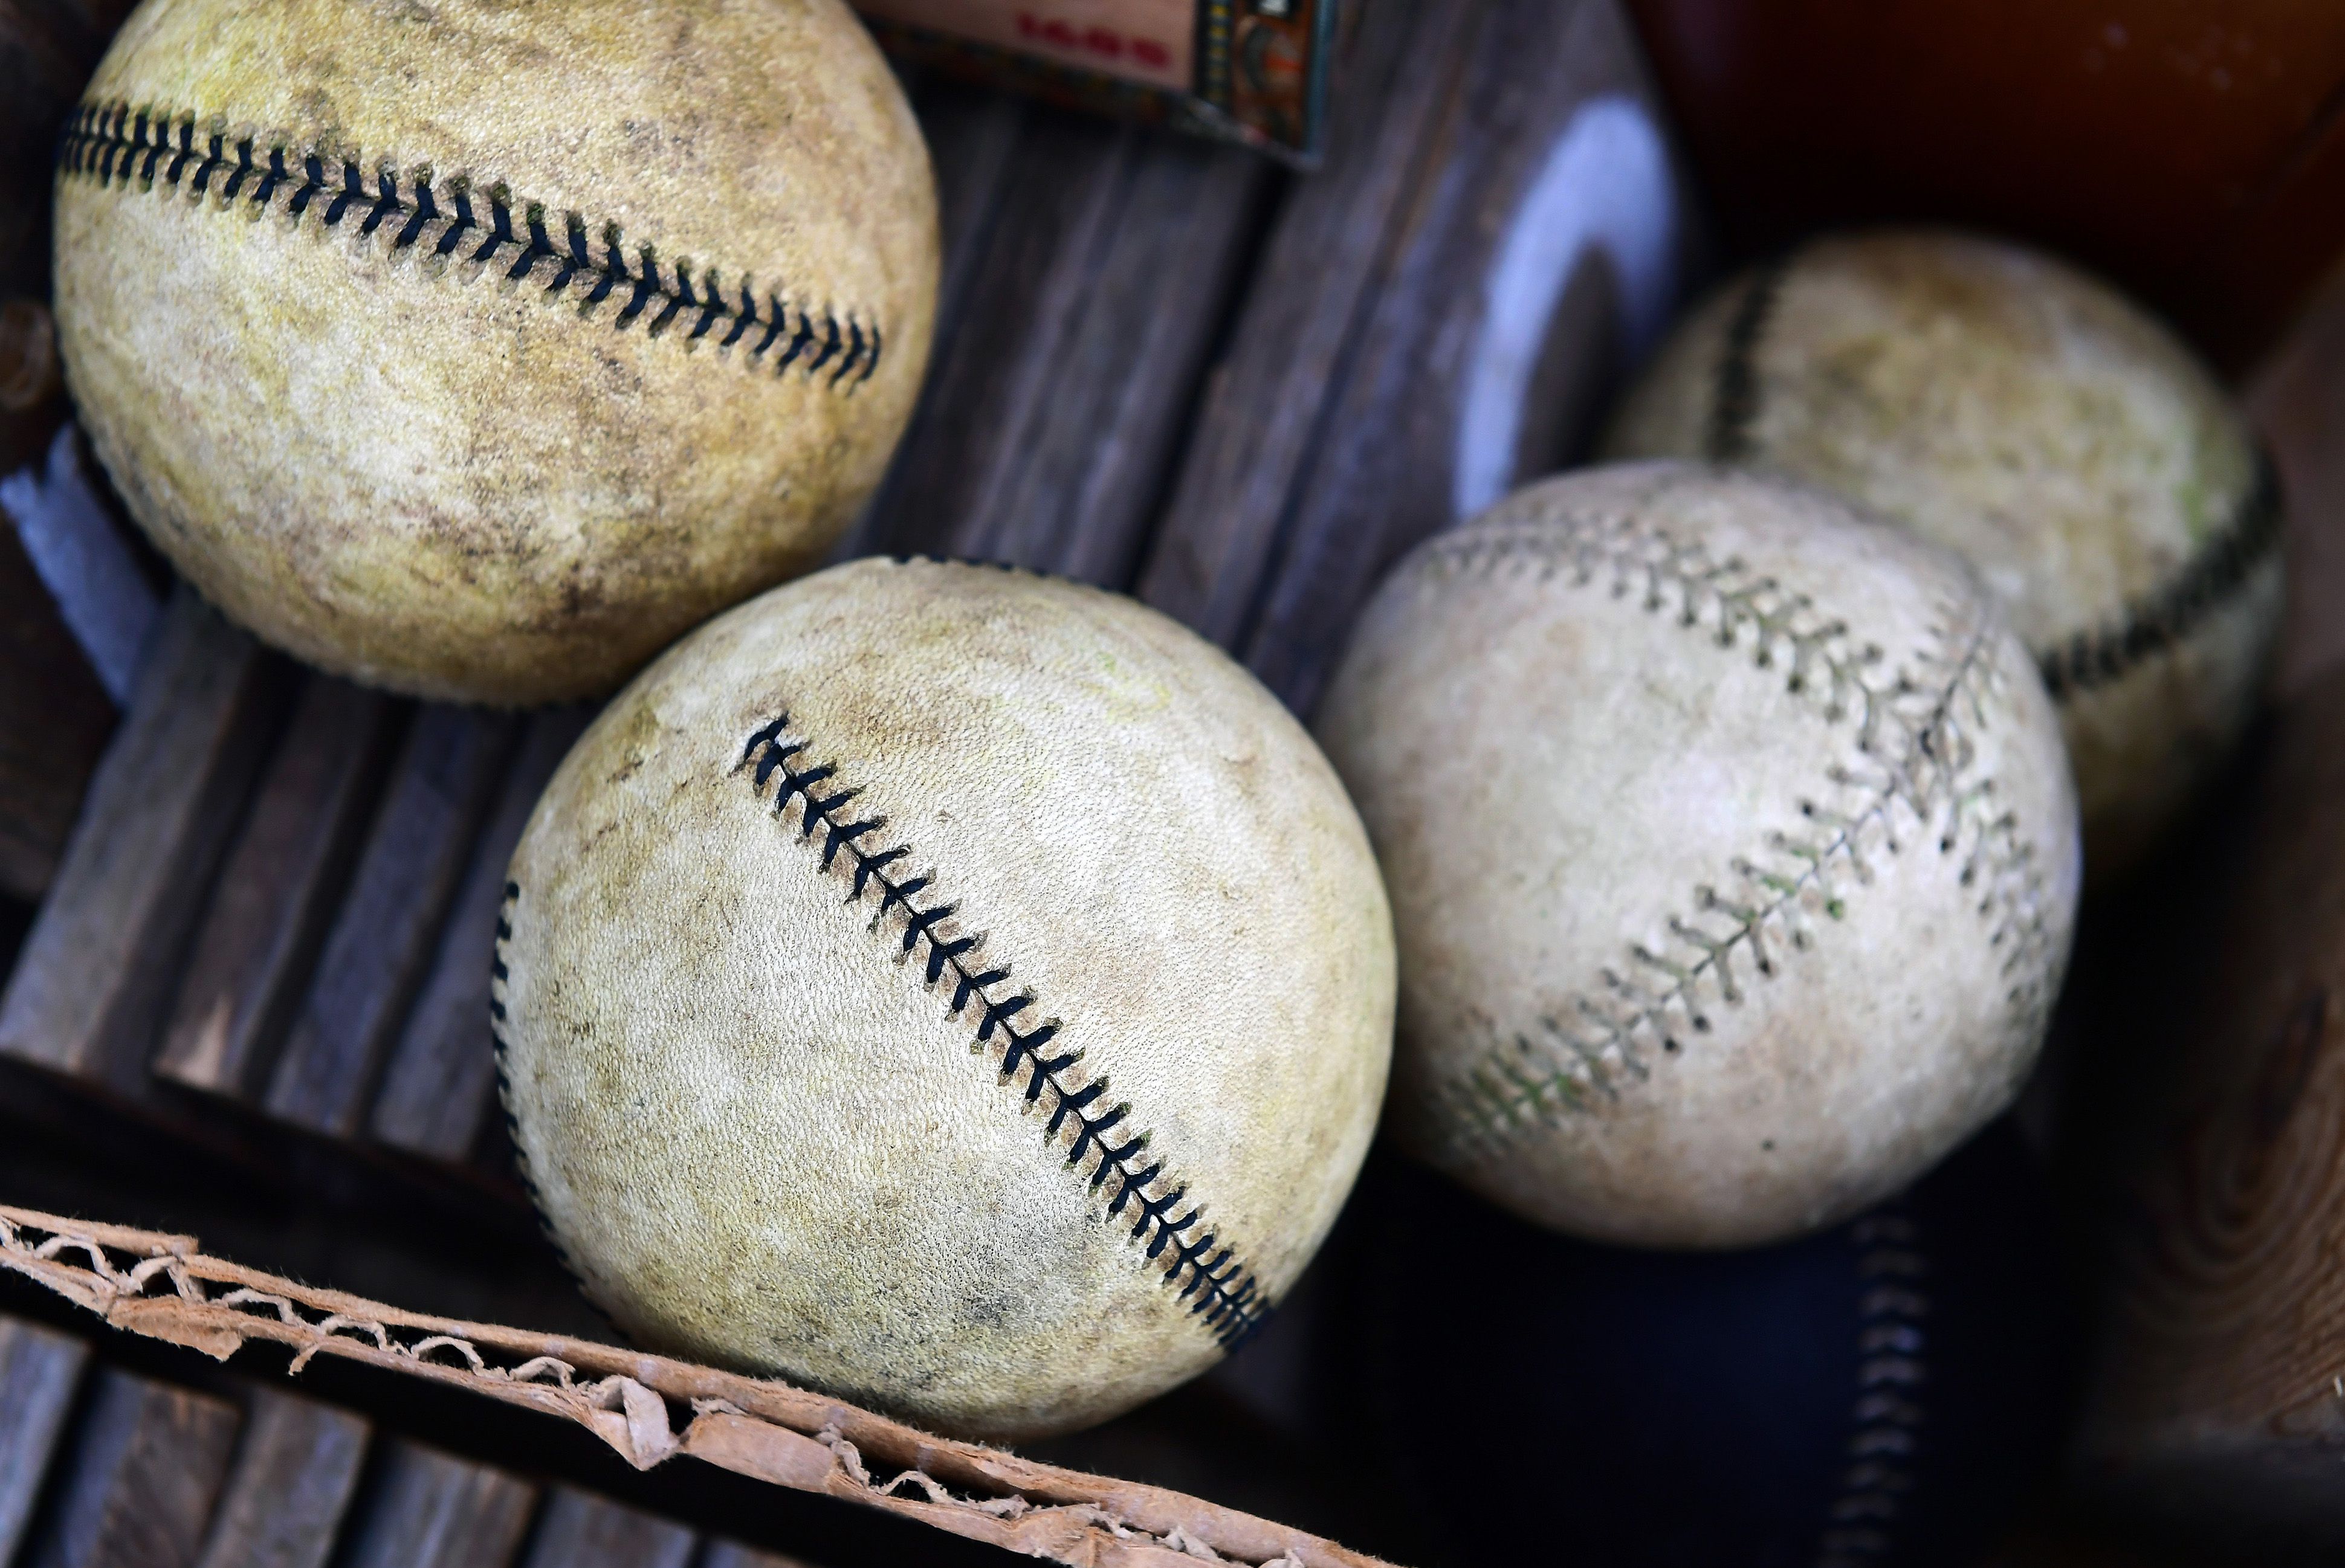 Joseph 'Tree' Khawaja, others, party like it's 1886 in Bay Area Vintage  Baseball League – Times Herald Online